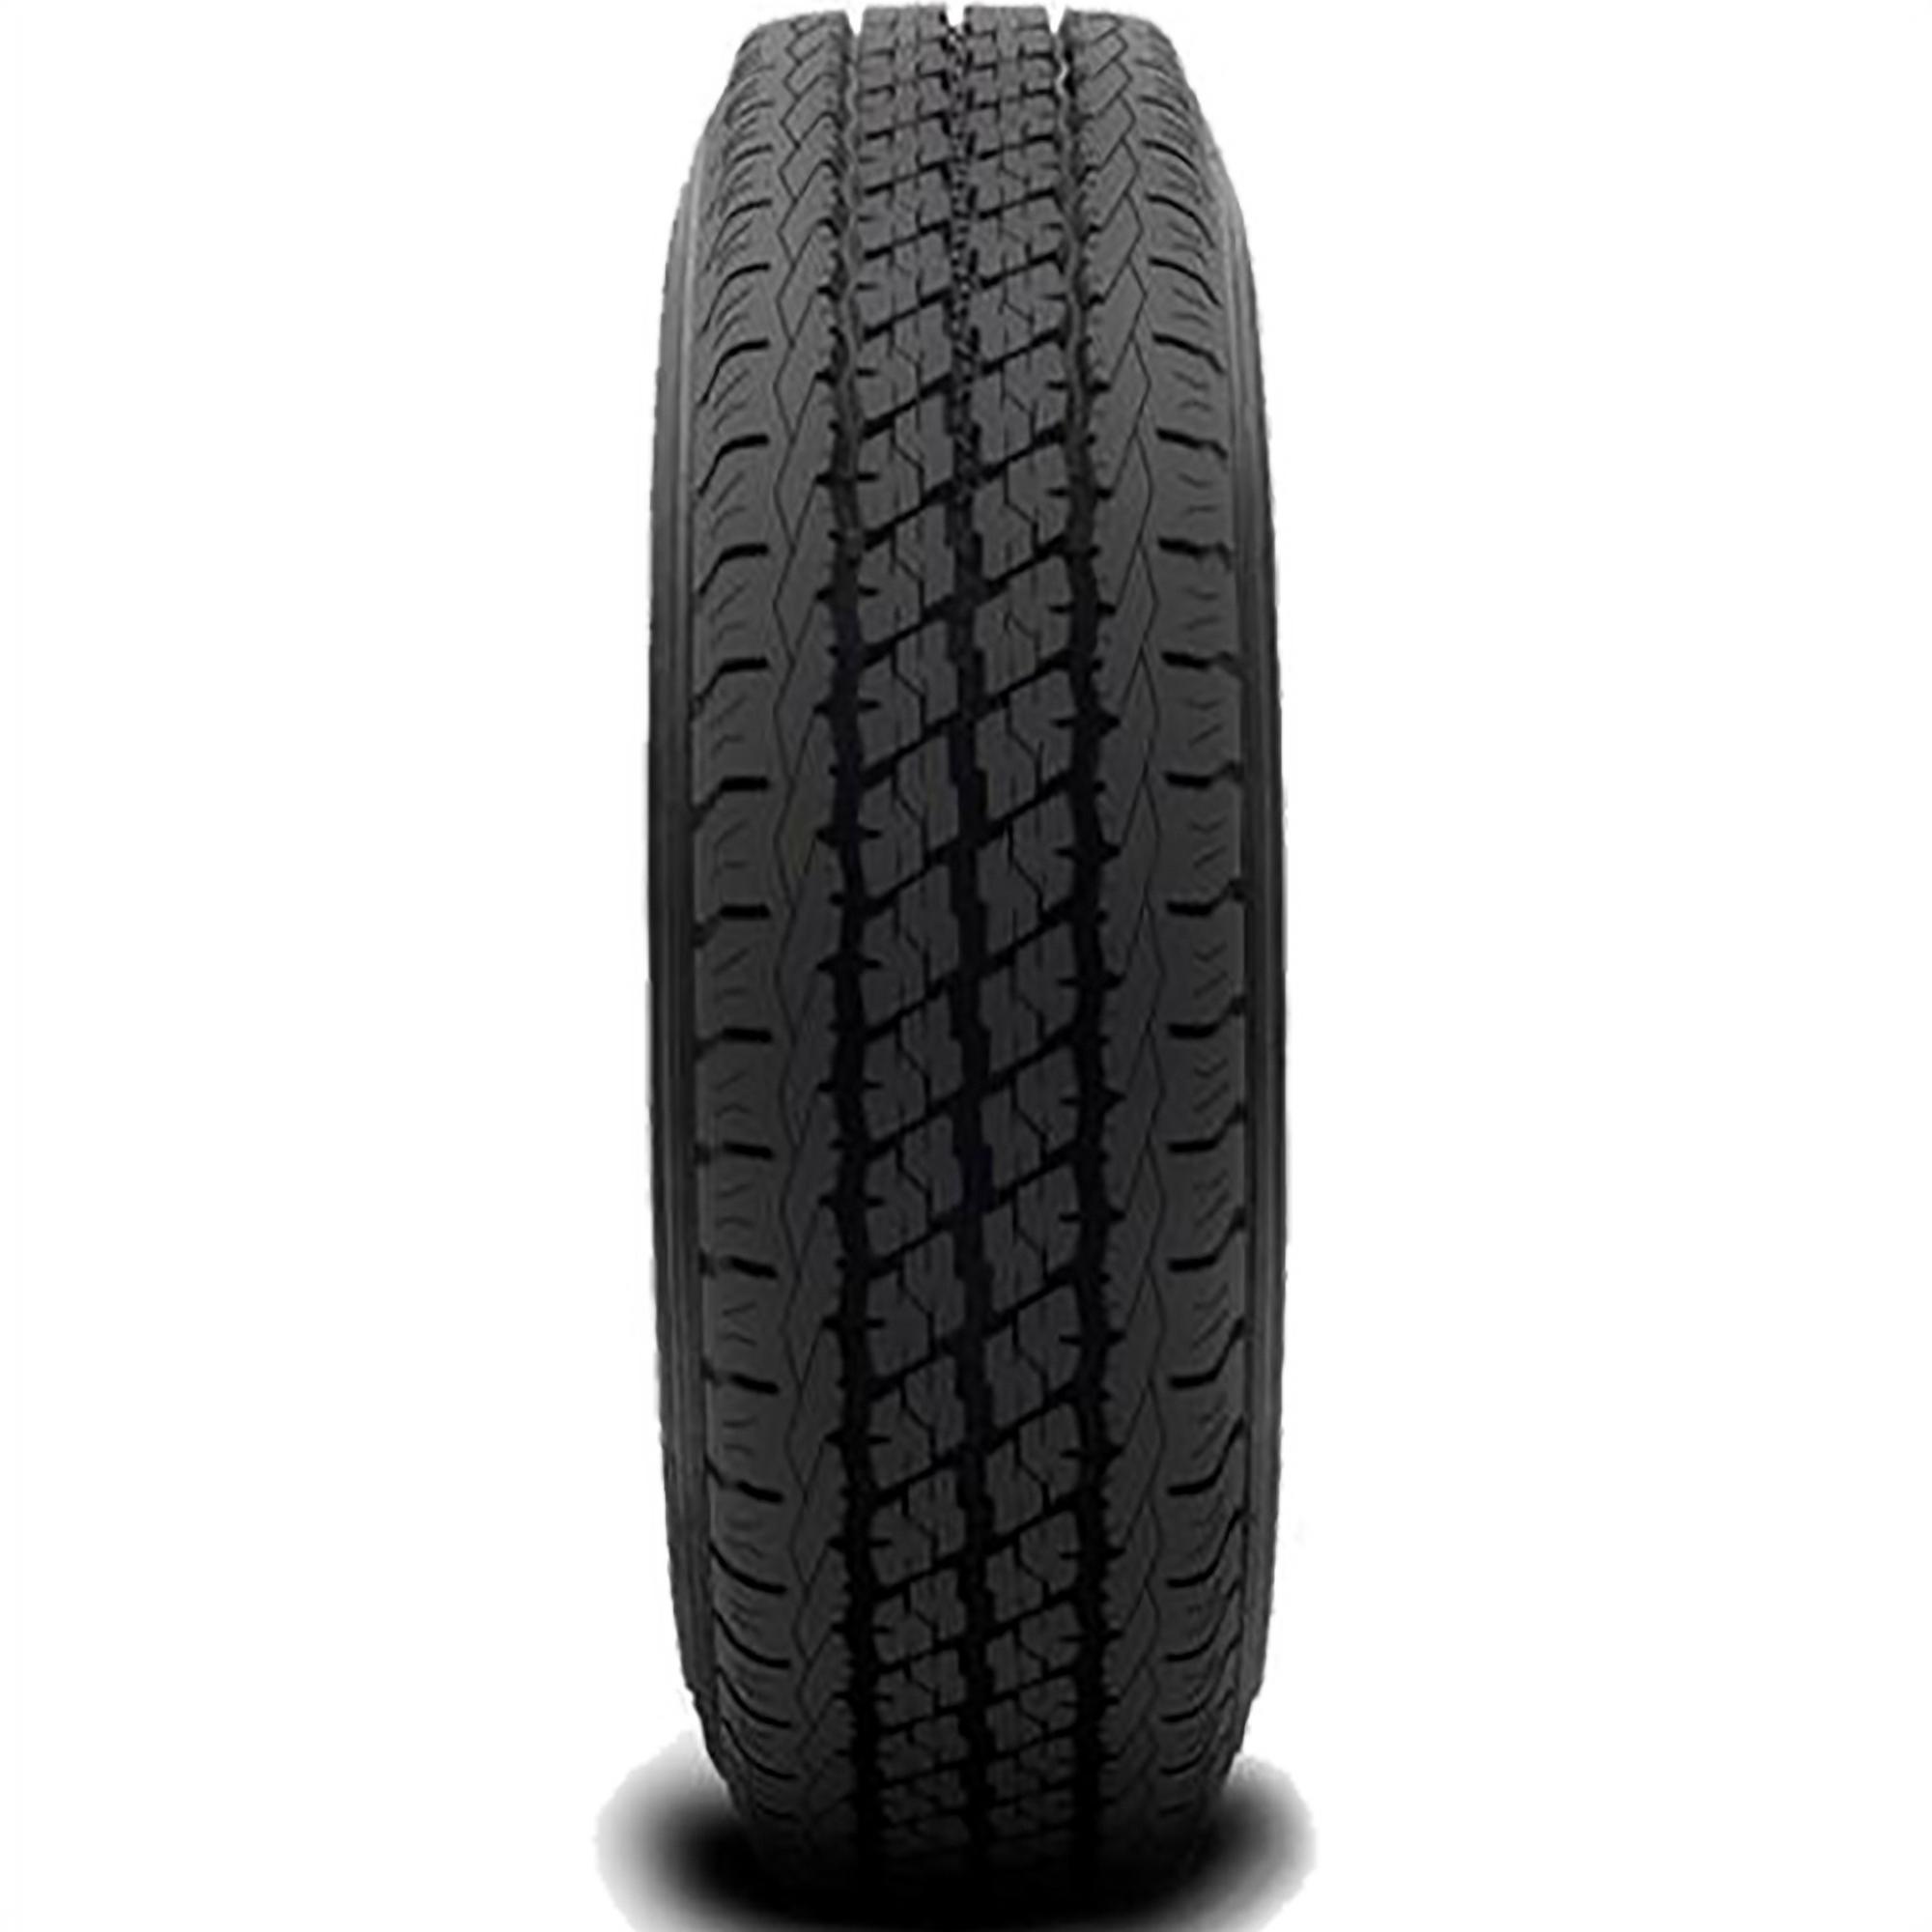 Bridgestone Duravis R500 HD All Season LT265/70R17 121/118R E Light Truck Tire - image 3 of 7